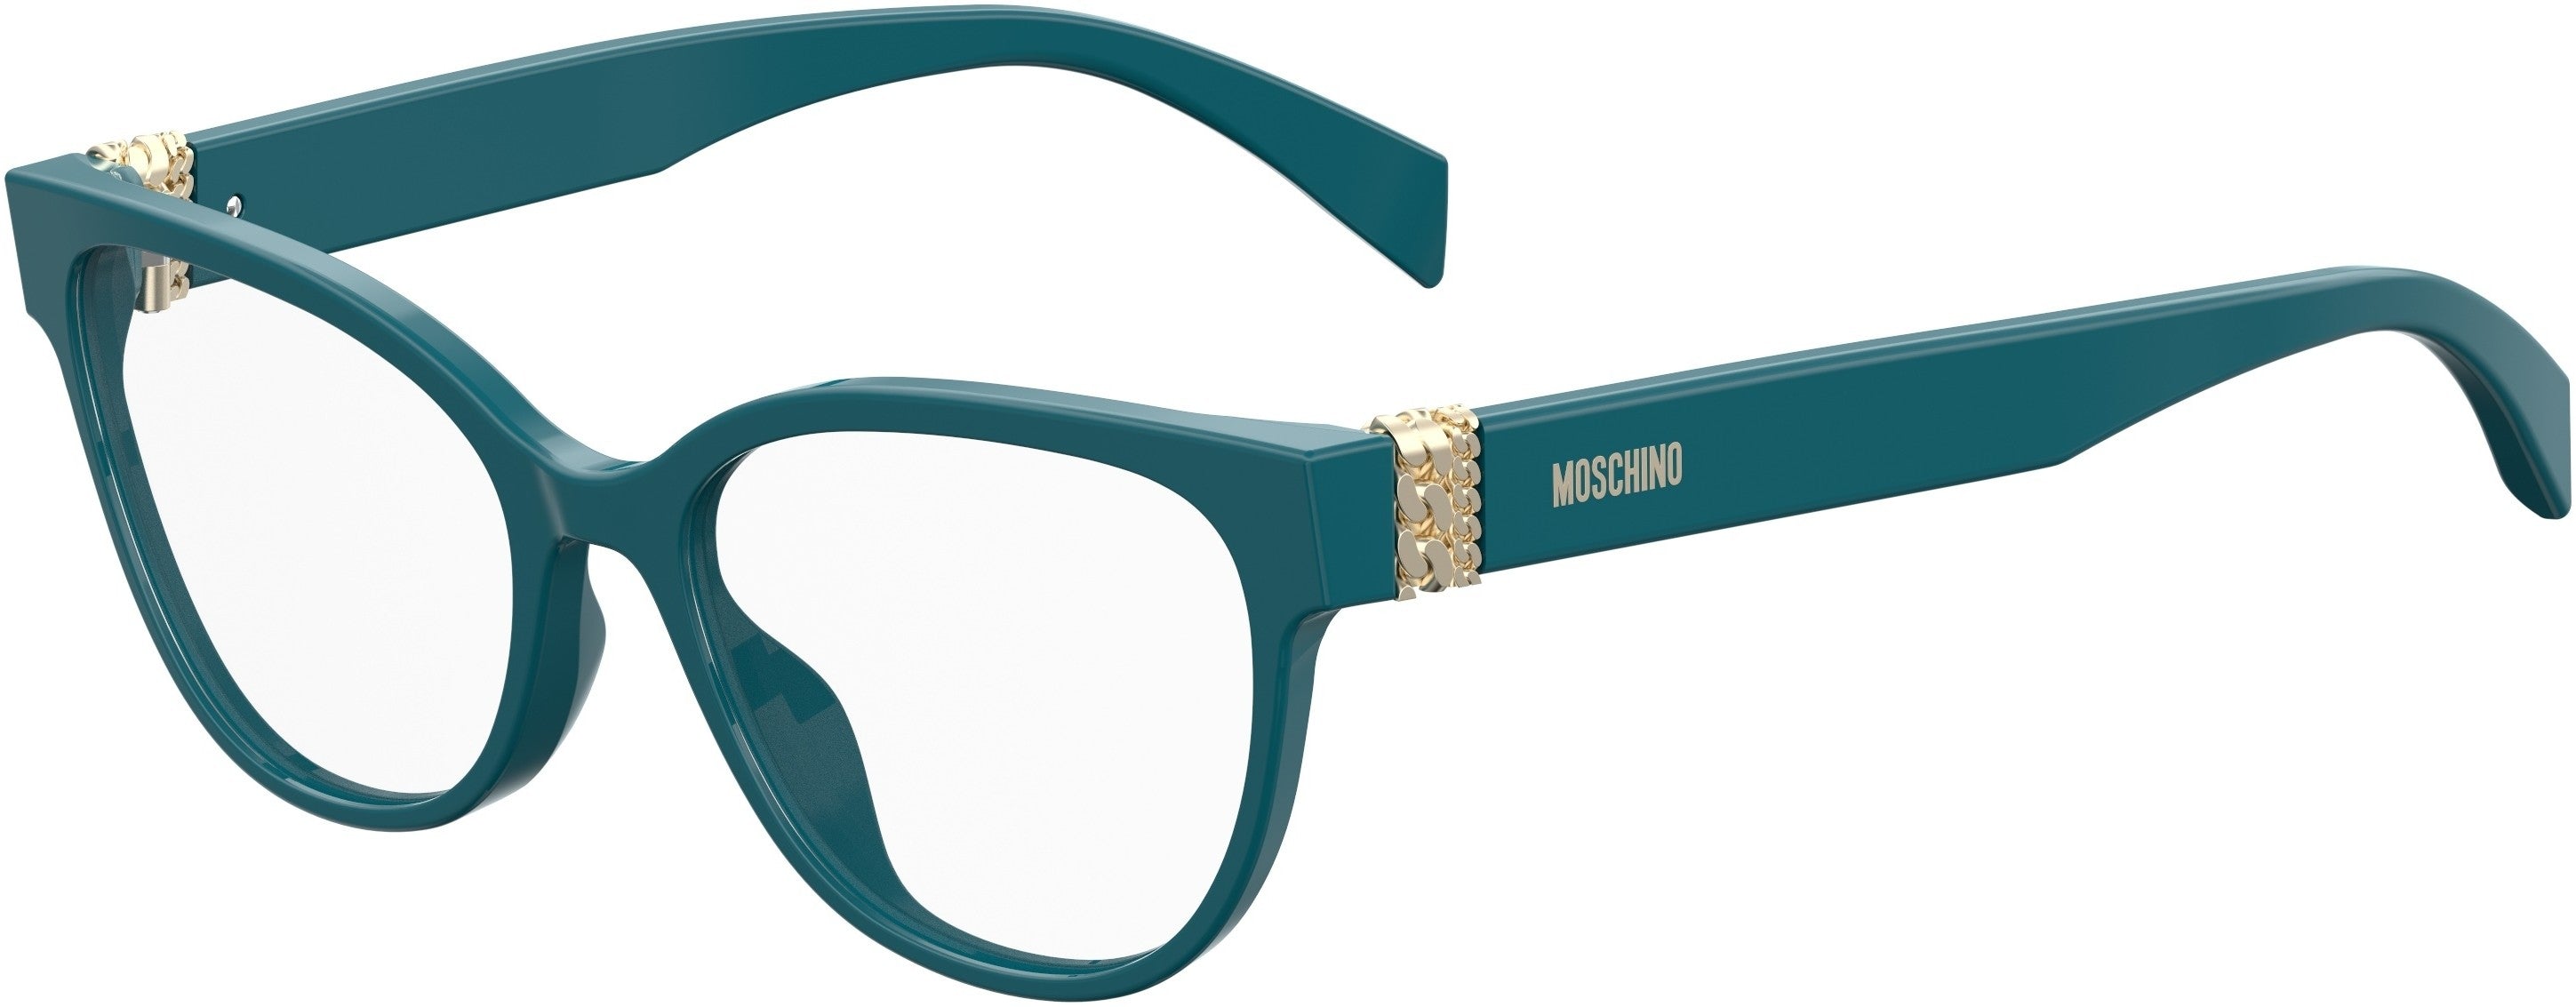  Moschino 509 Oval Modified Eyeglasses 0ZI9-0ZI9  Transparent Teal Tea (00 Demo Lens)